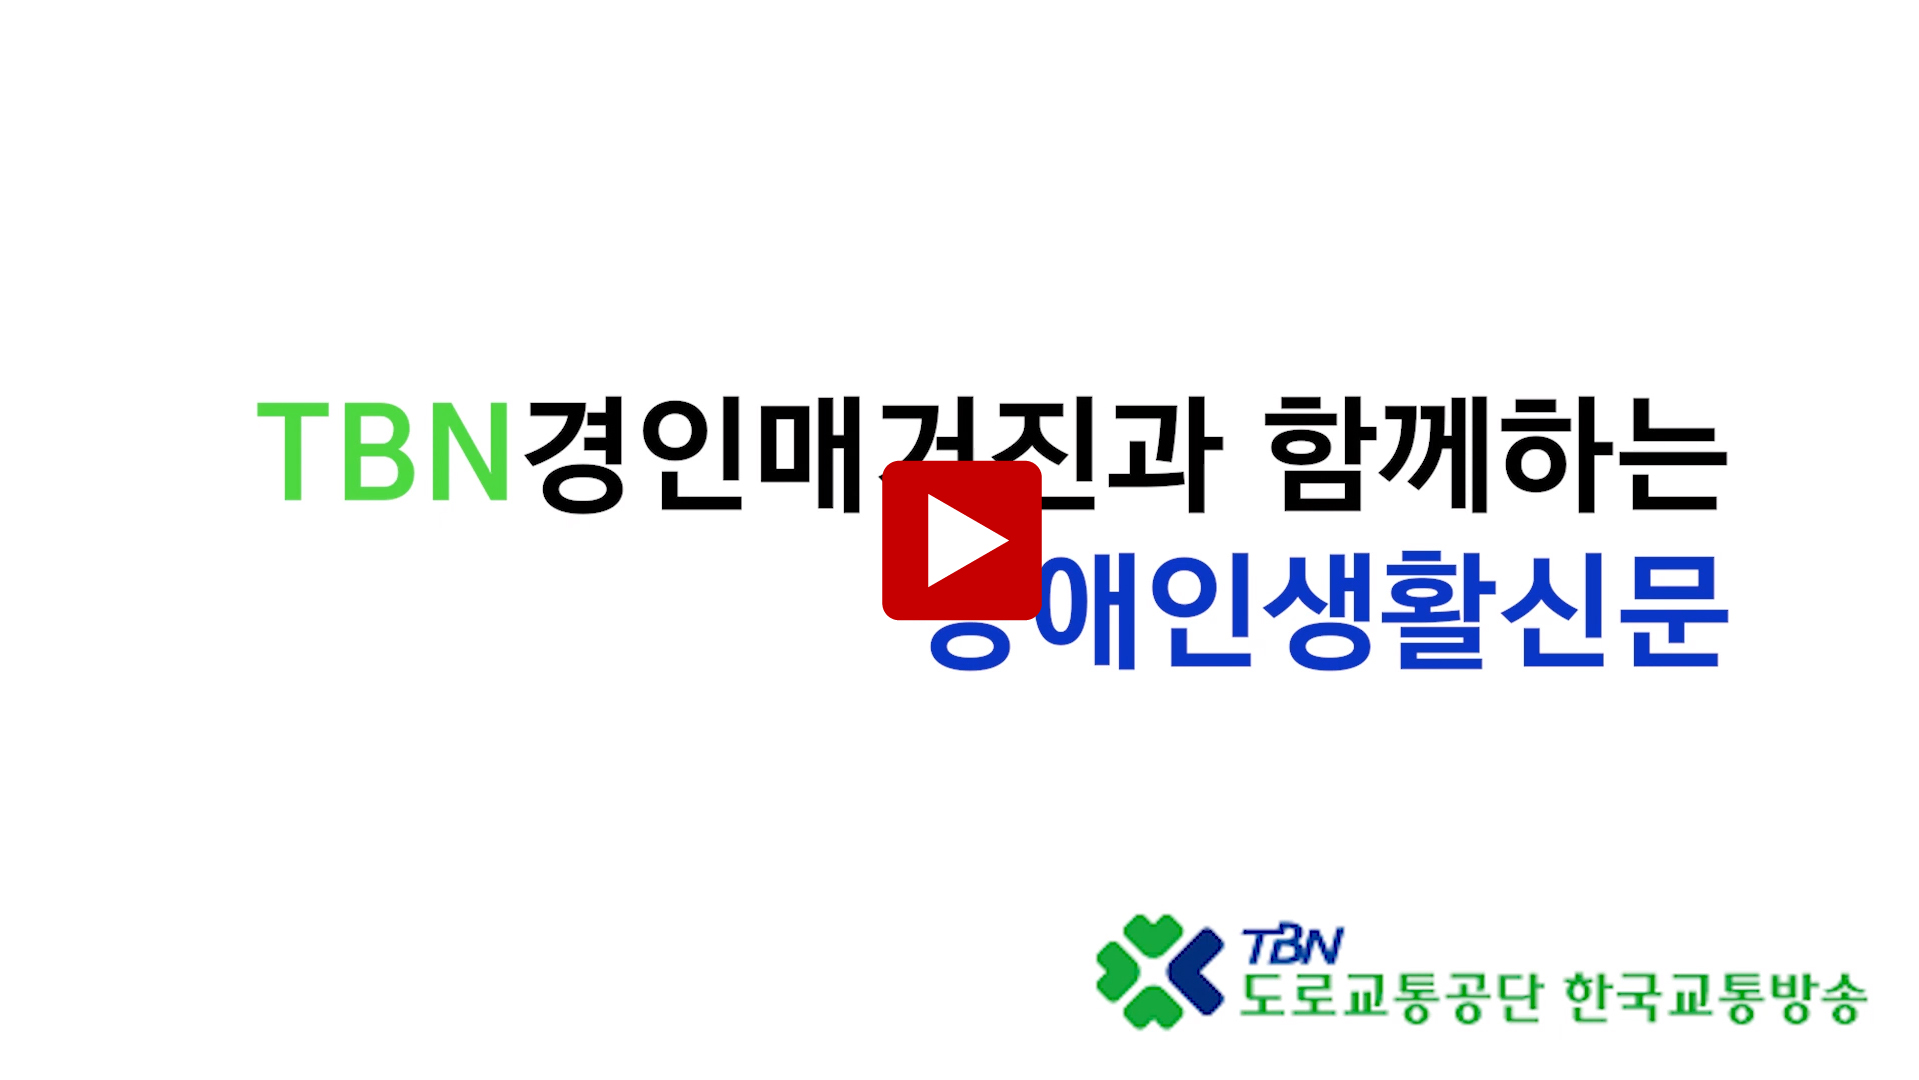 TBN경인매거진과 함께하는 장애인생활신문 -2022년 2월 9일 방송